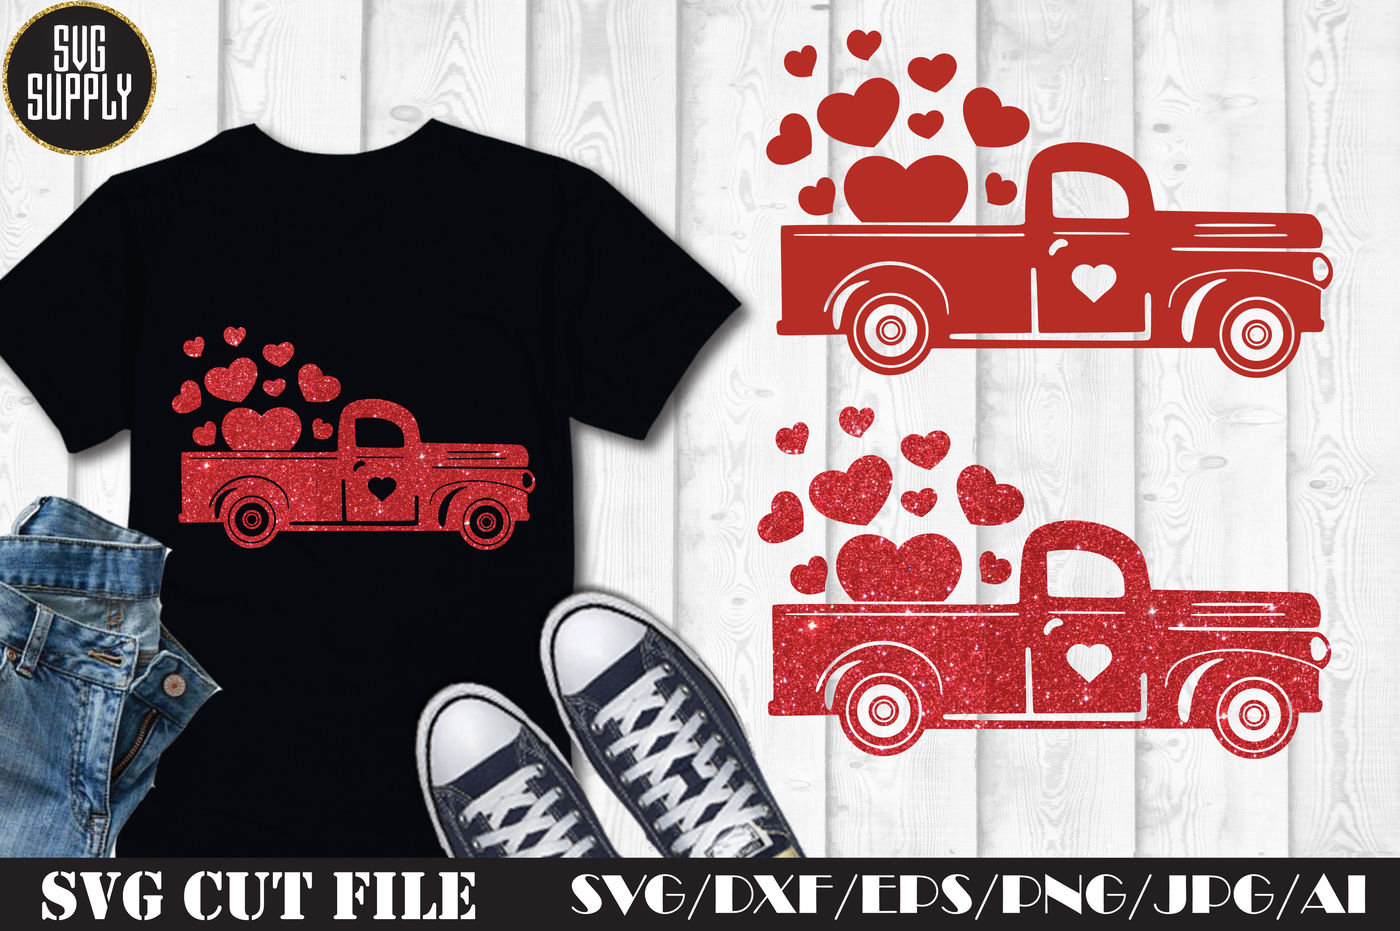 Valentines Day Truck Svg Cut File By Svgsupply Thehungryjpeg Com